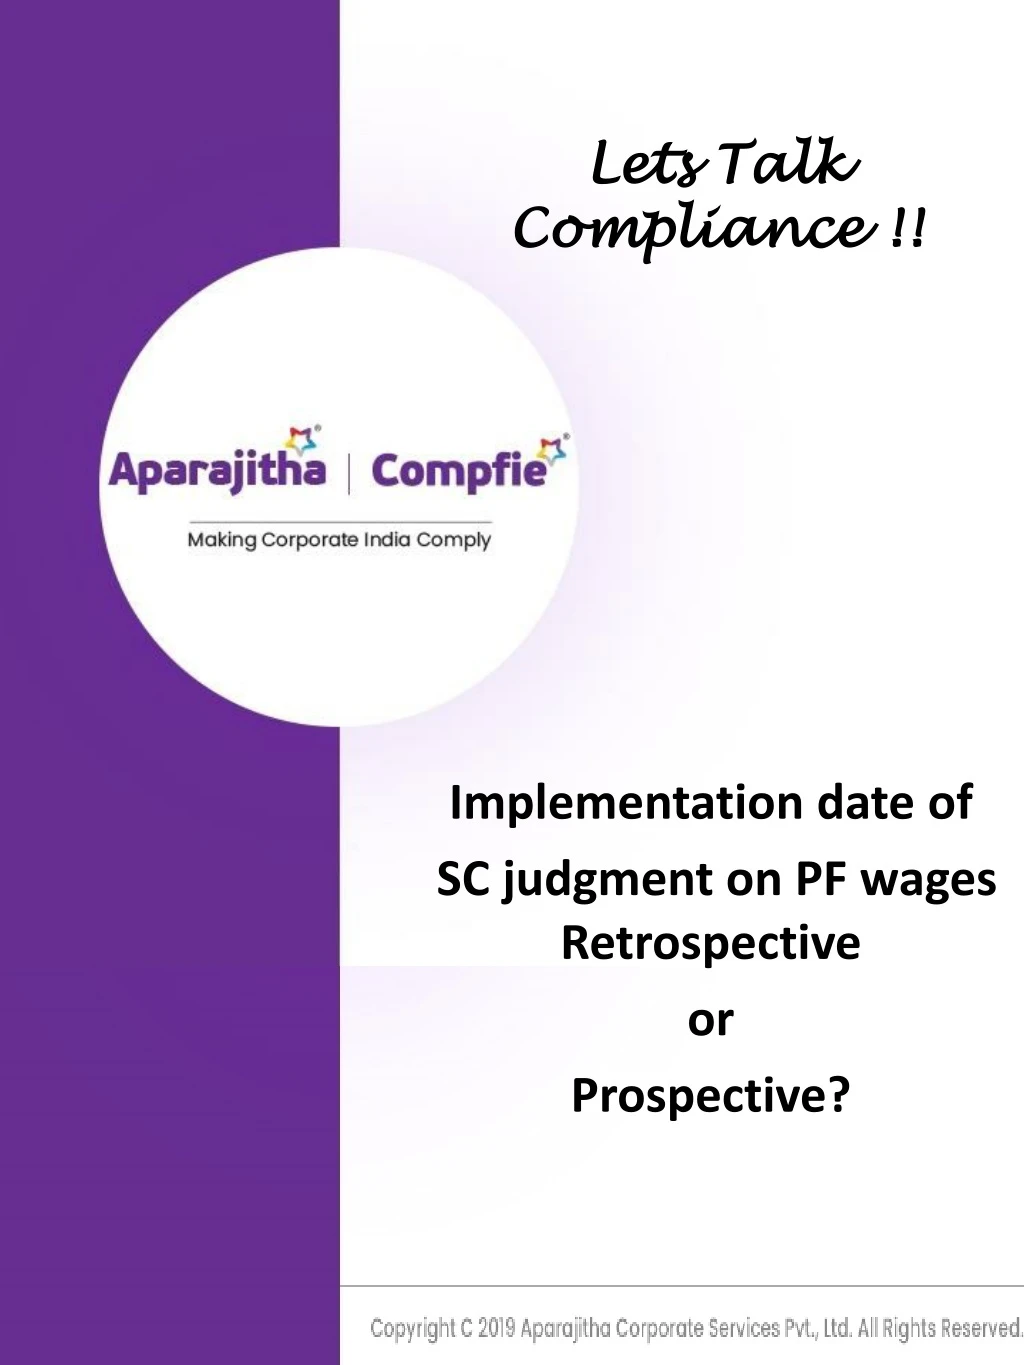 lets talk lets talk compliance compliance